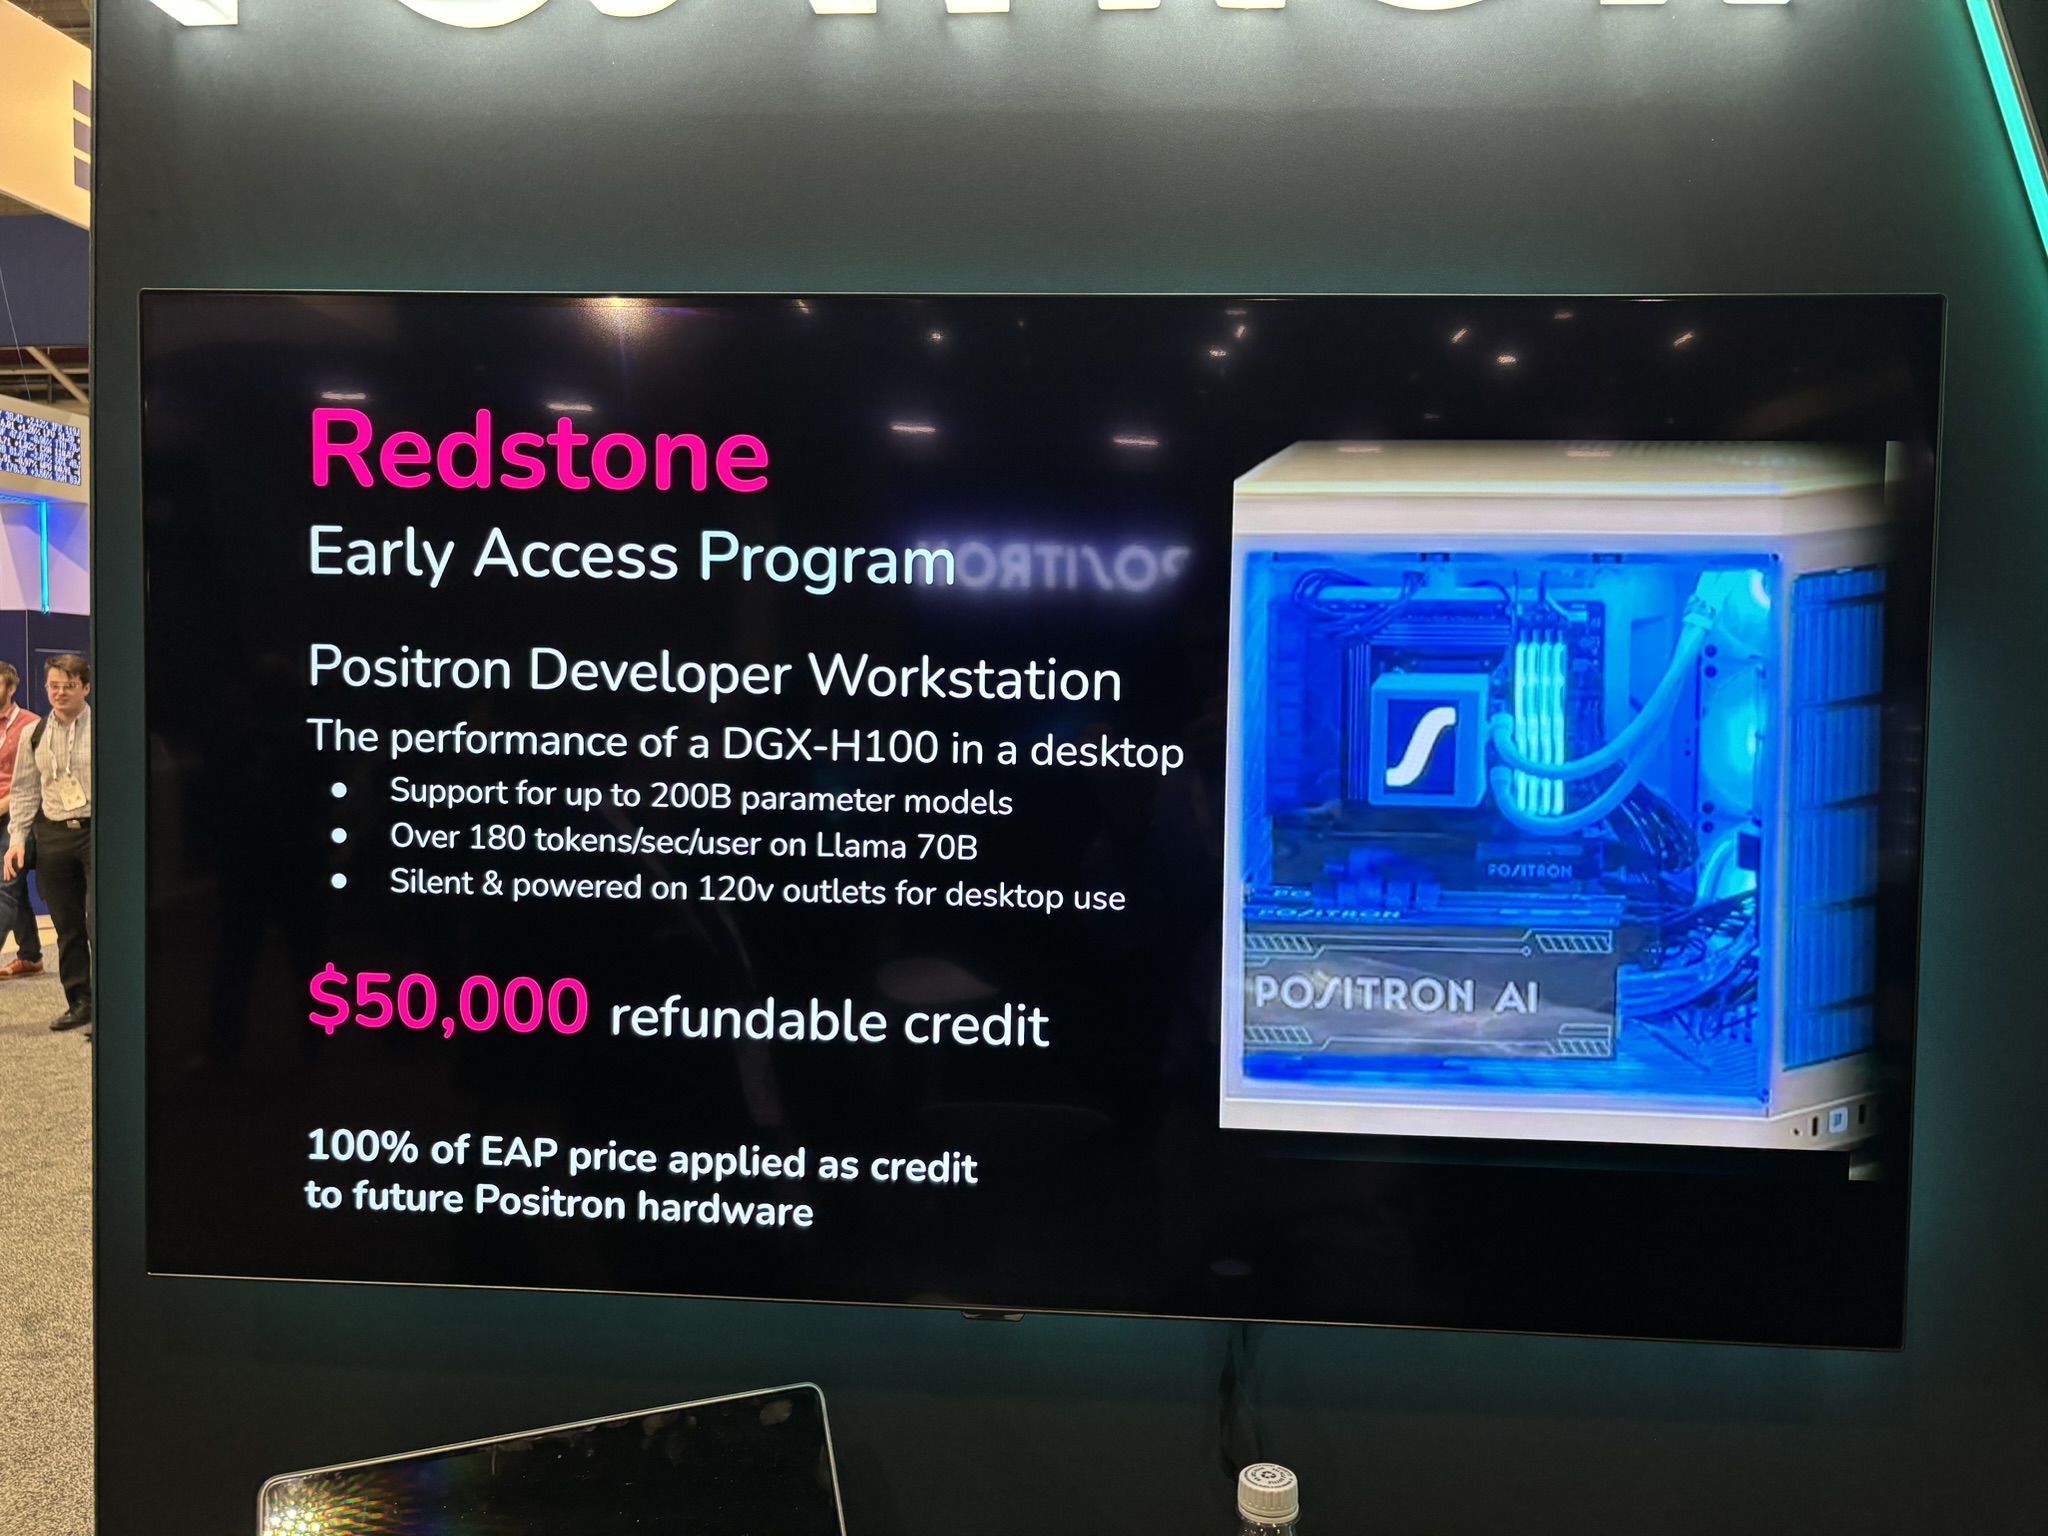 Positron Developer Workstation: $50,000 refundable credit